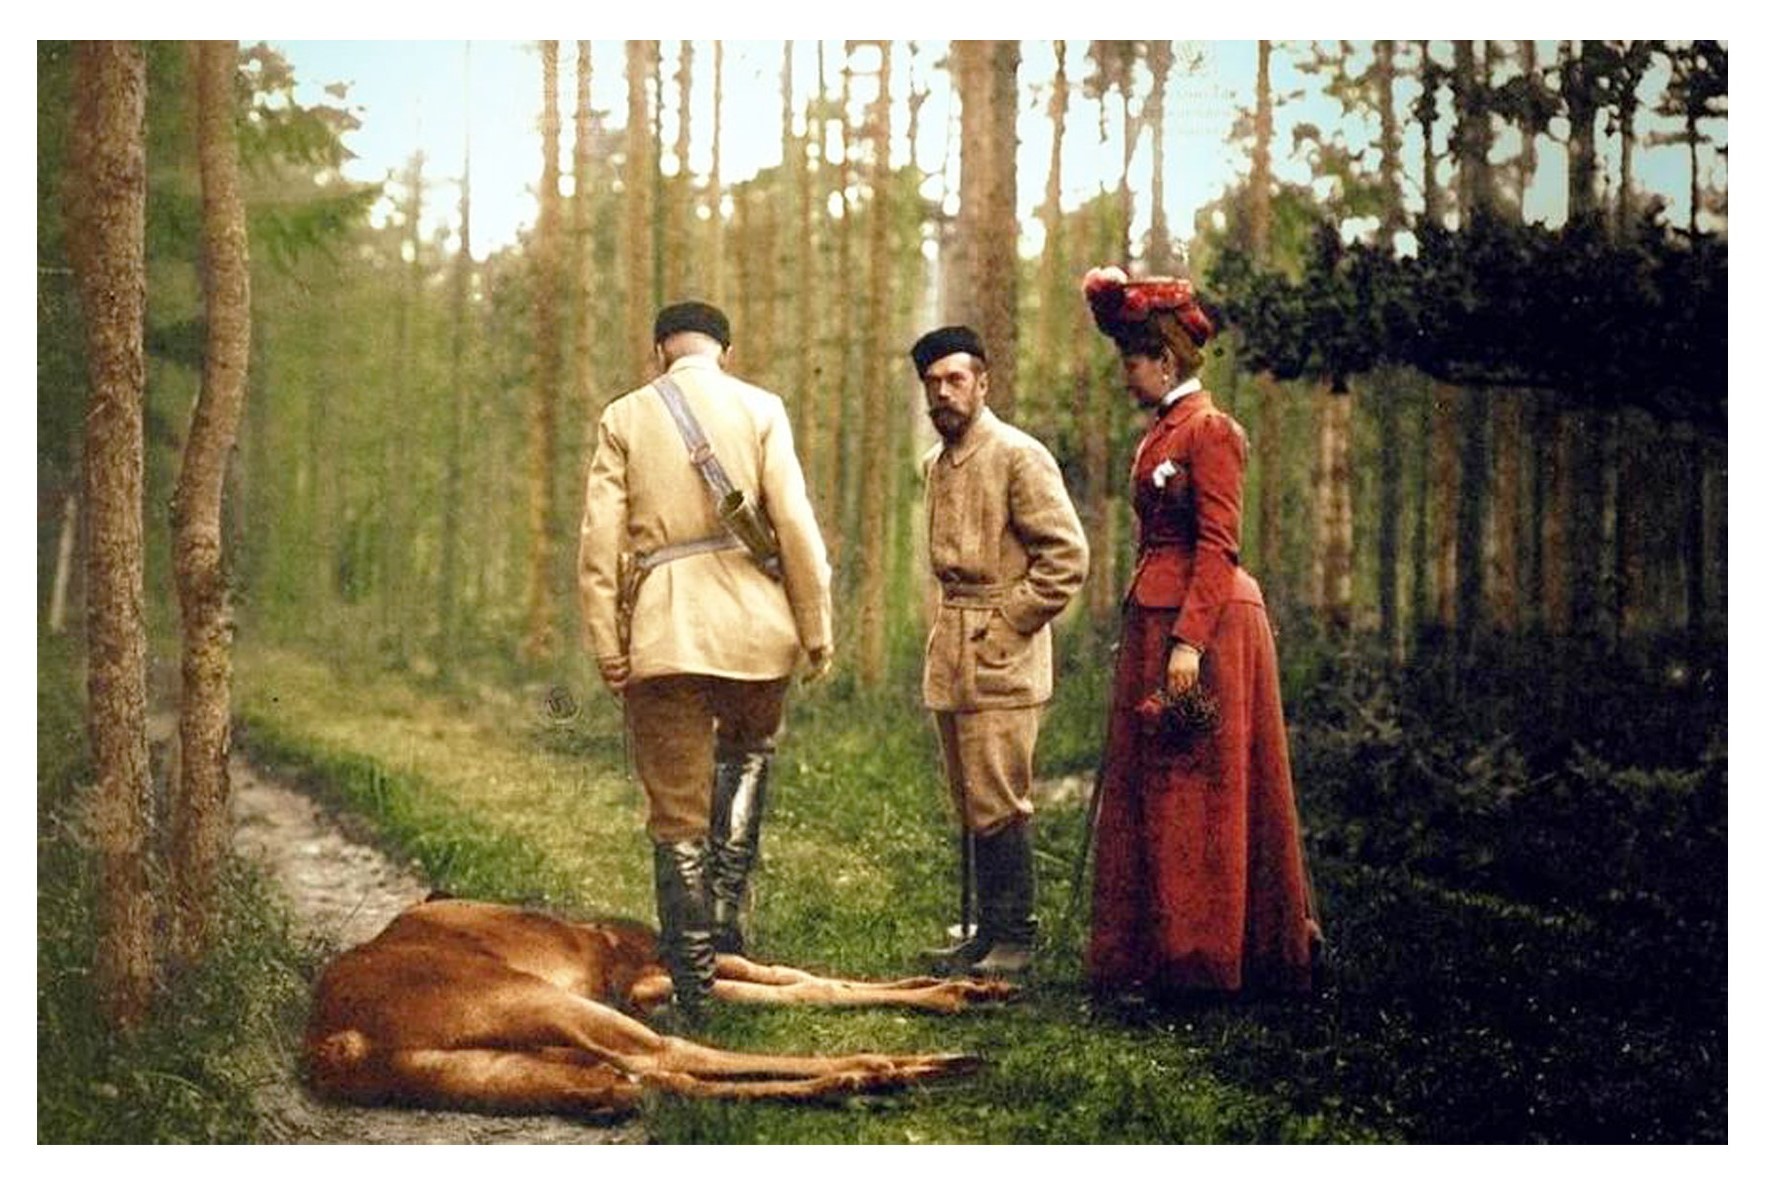 Николай возле убитого лося цвет - рез.jpg